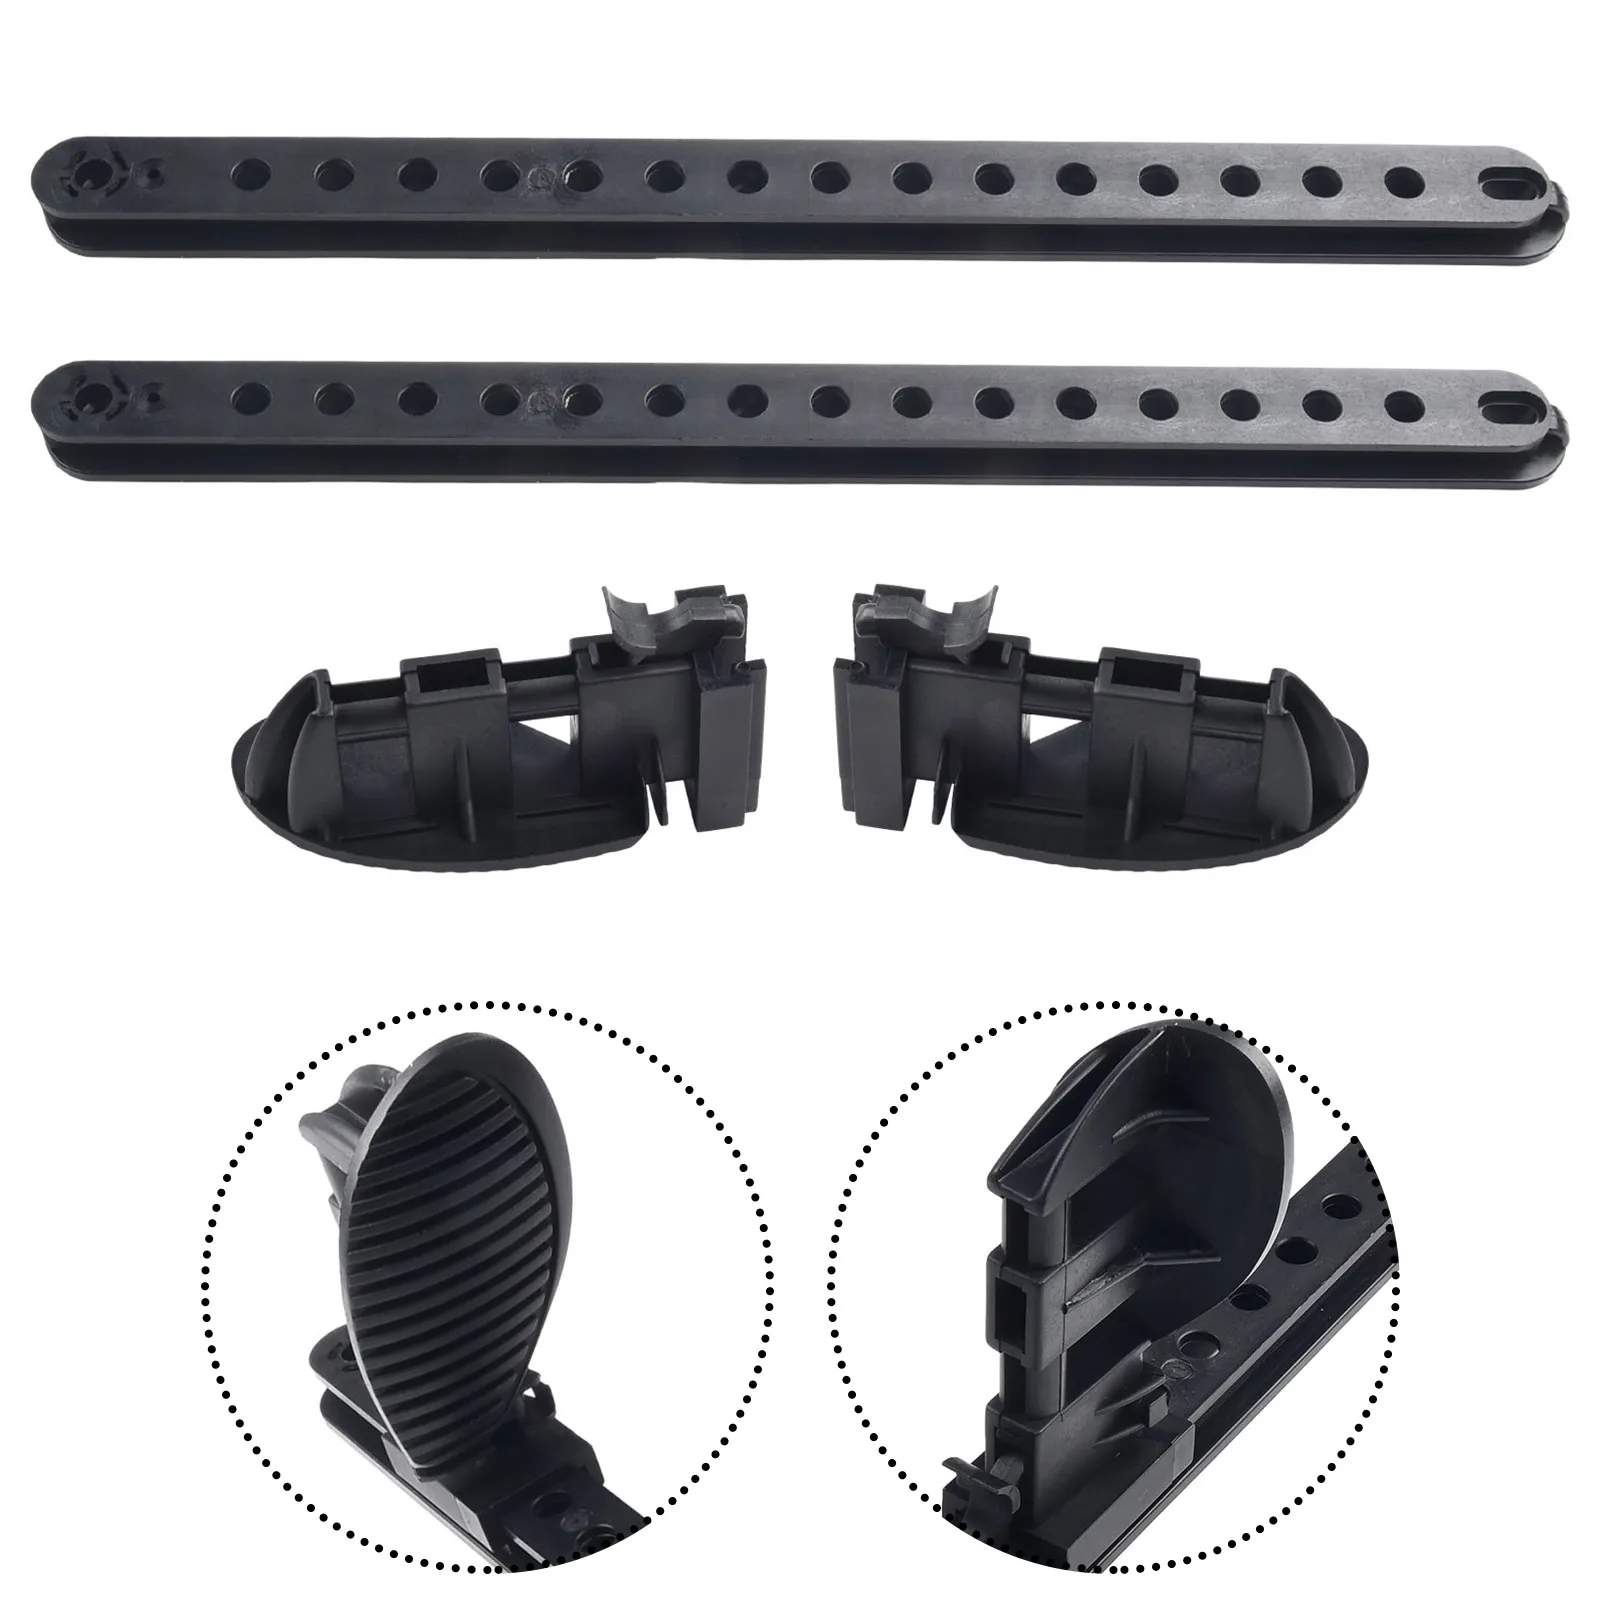 

Brace Pedal Foot 1pair 41.5 Cm / 16.3 Inches Accessories Adjustable Canoe Foot Peg Rest Kayak Locking Ship Plastic